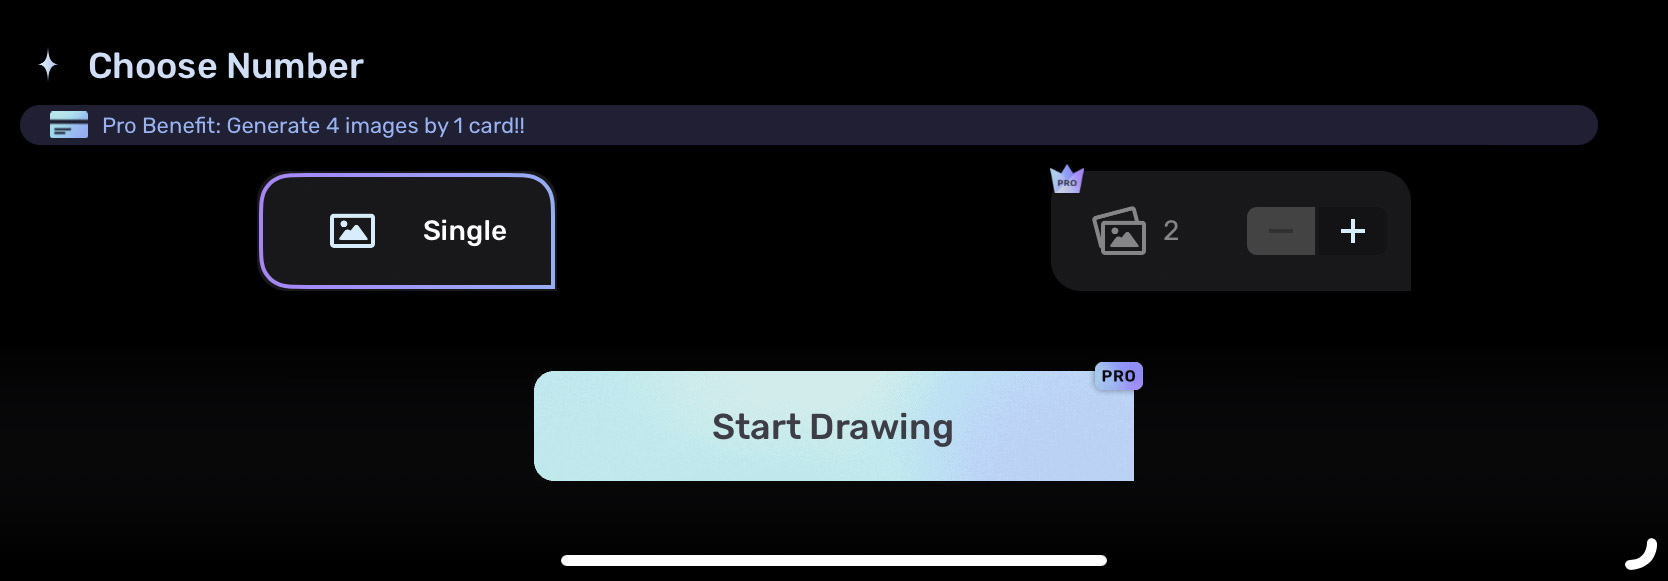 Start Drawing button in UniDream